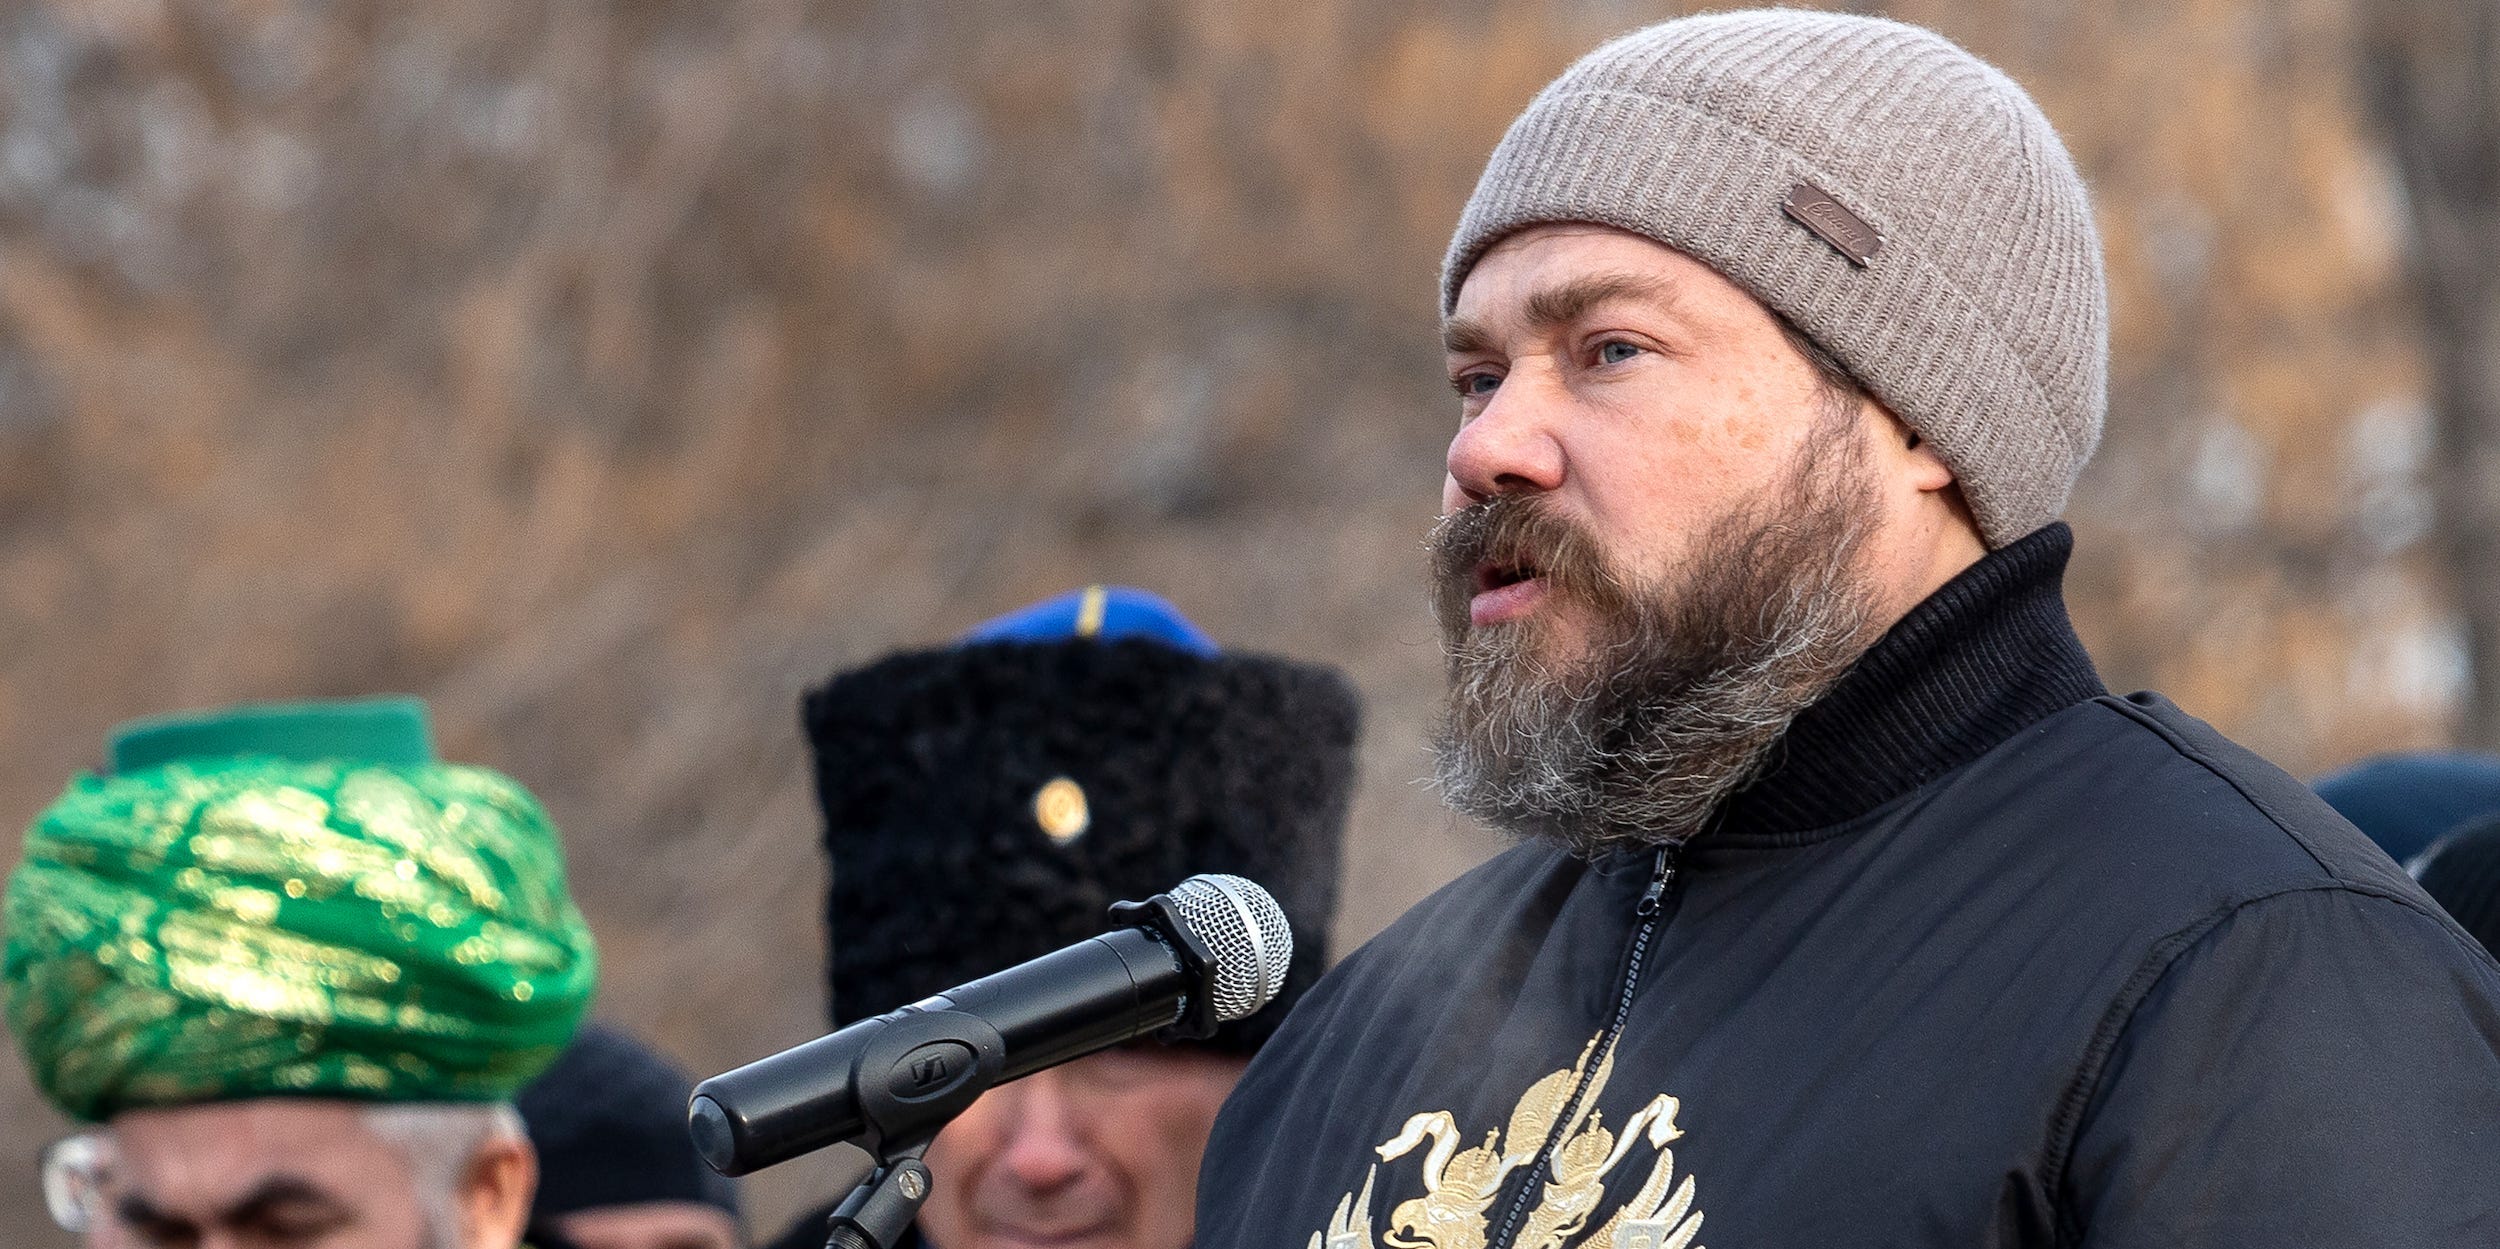 Russian oligarch Konstantin Malofeyev wears a grey winter cap and a black jacket.